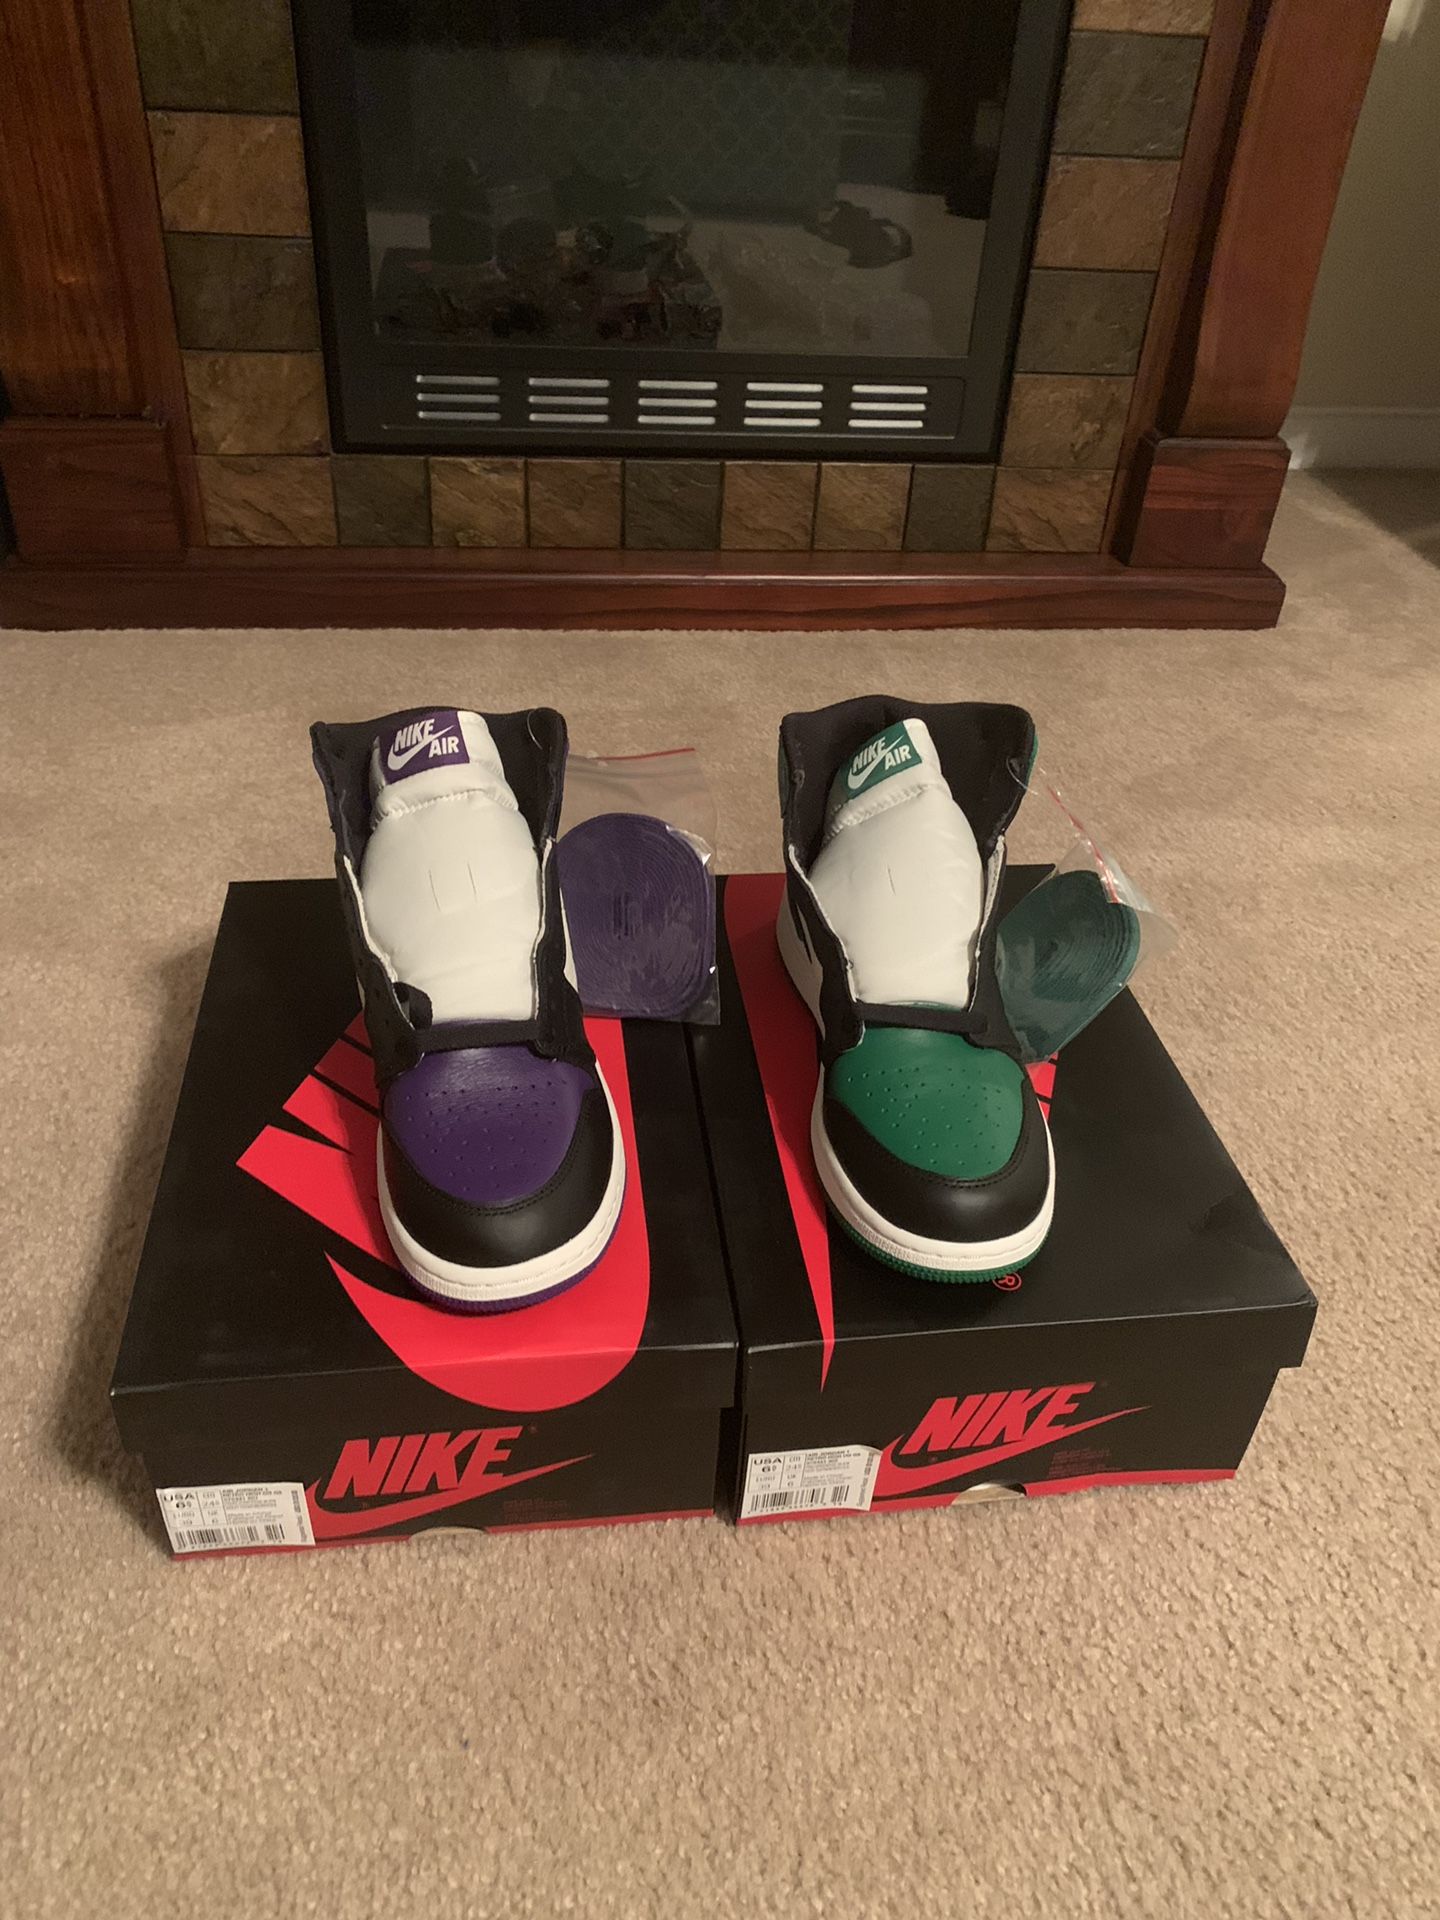 Jordan 1 court purple size 6.5